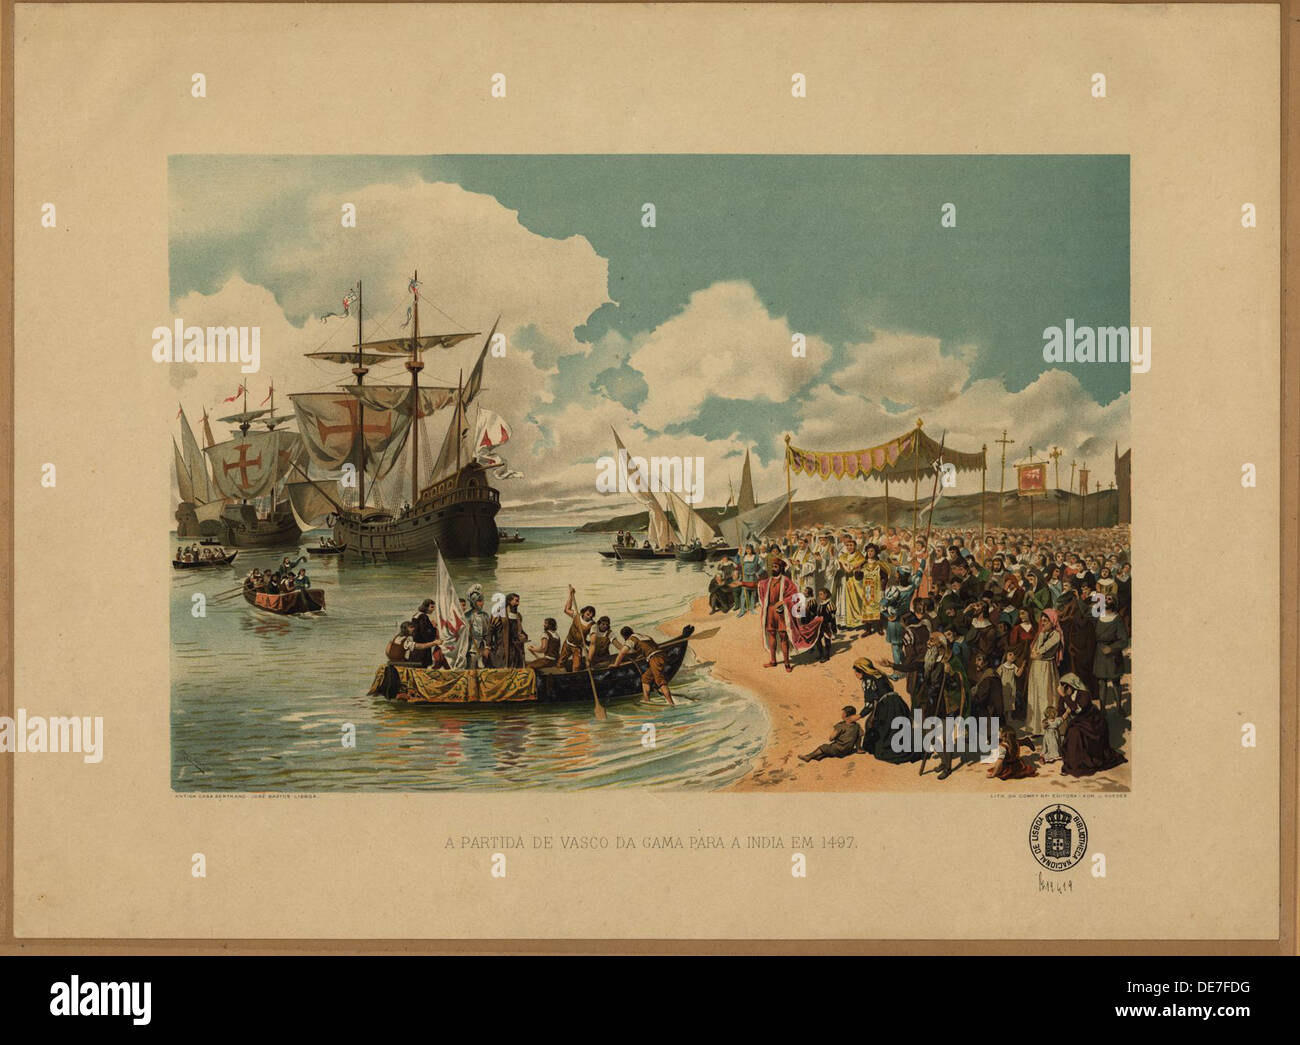 L'arrivée de Vasco de Gama en Inde, ch. 1900. Artiste : Gameiro, Alfredo Roque (1864-1935) Banque D'Images